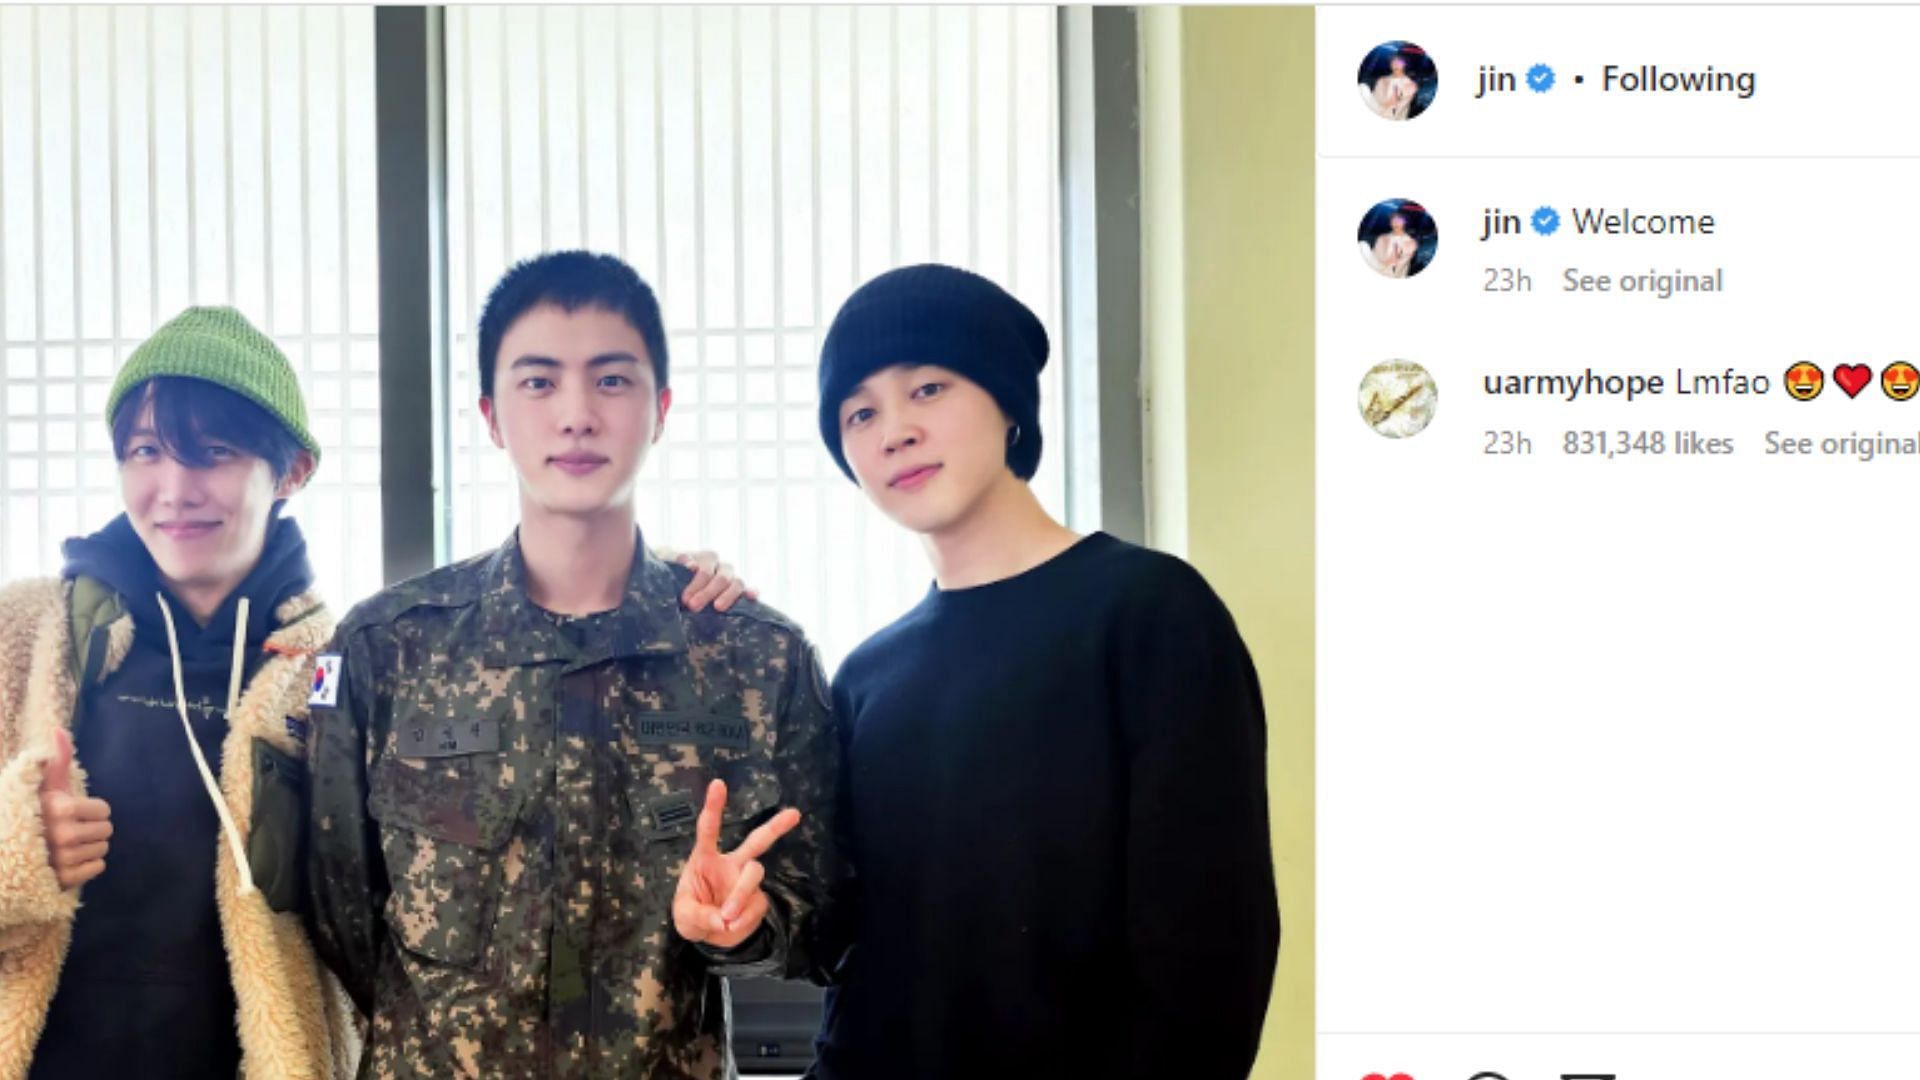 BTS&#039; Jin and J-hope indulge in fun banter on Instagram (Image via Instagram/@jin)